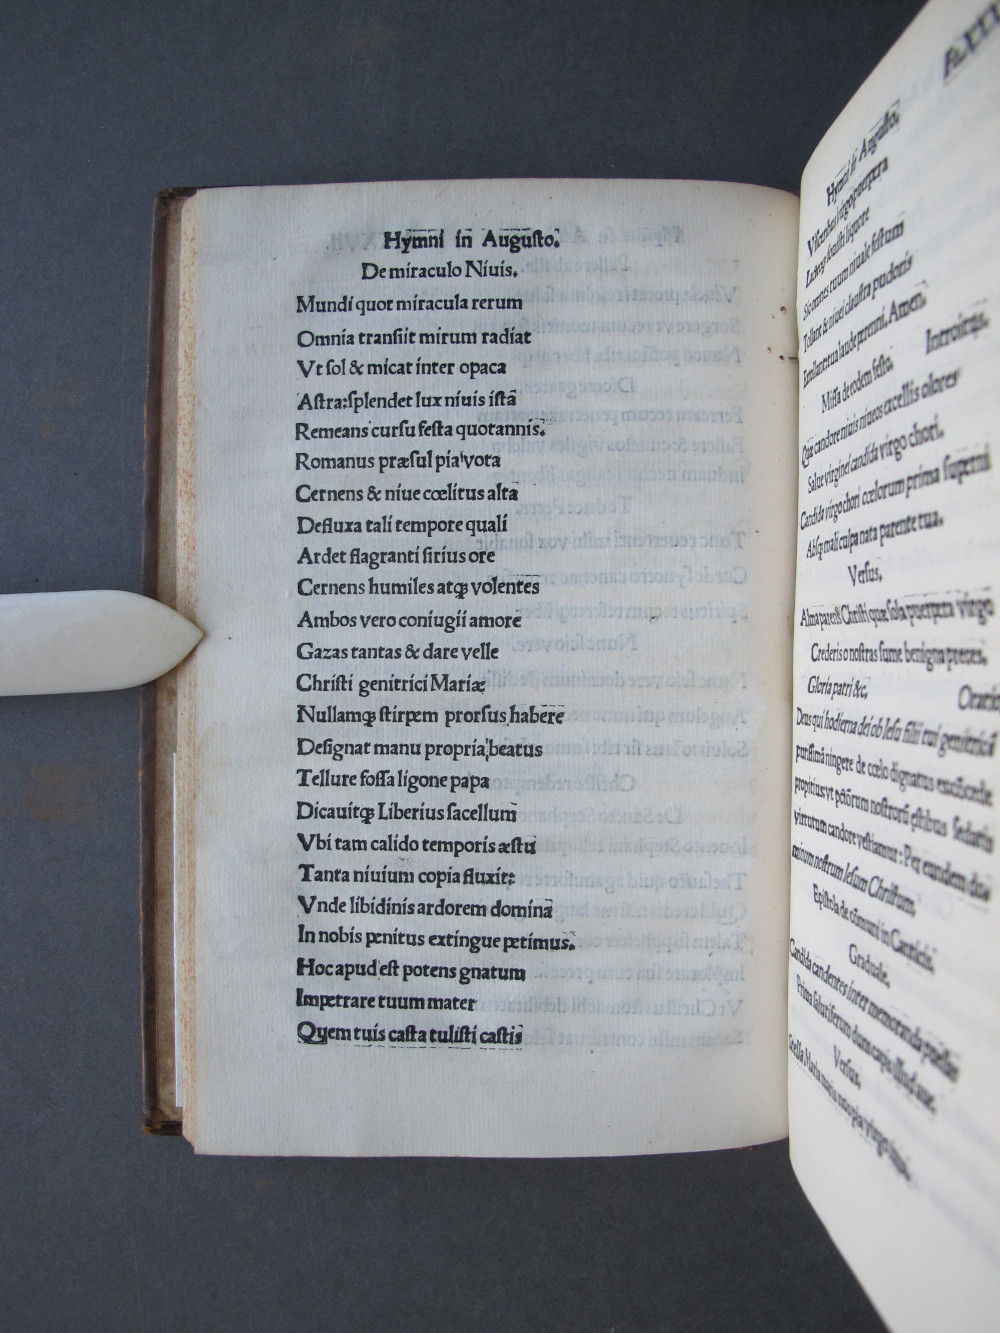 Folio 37 verso